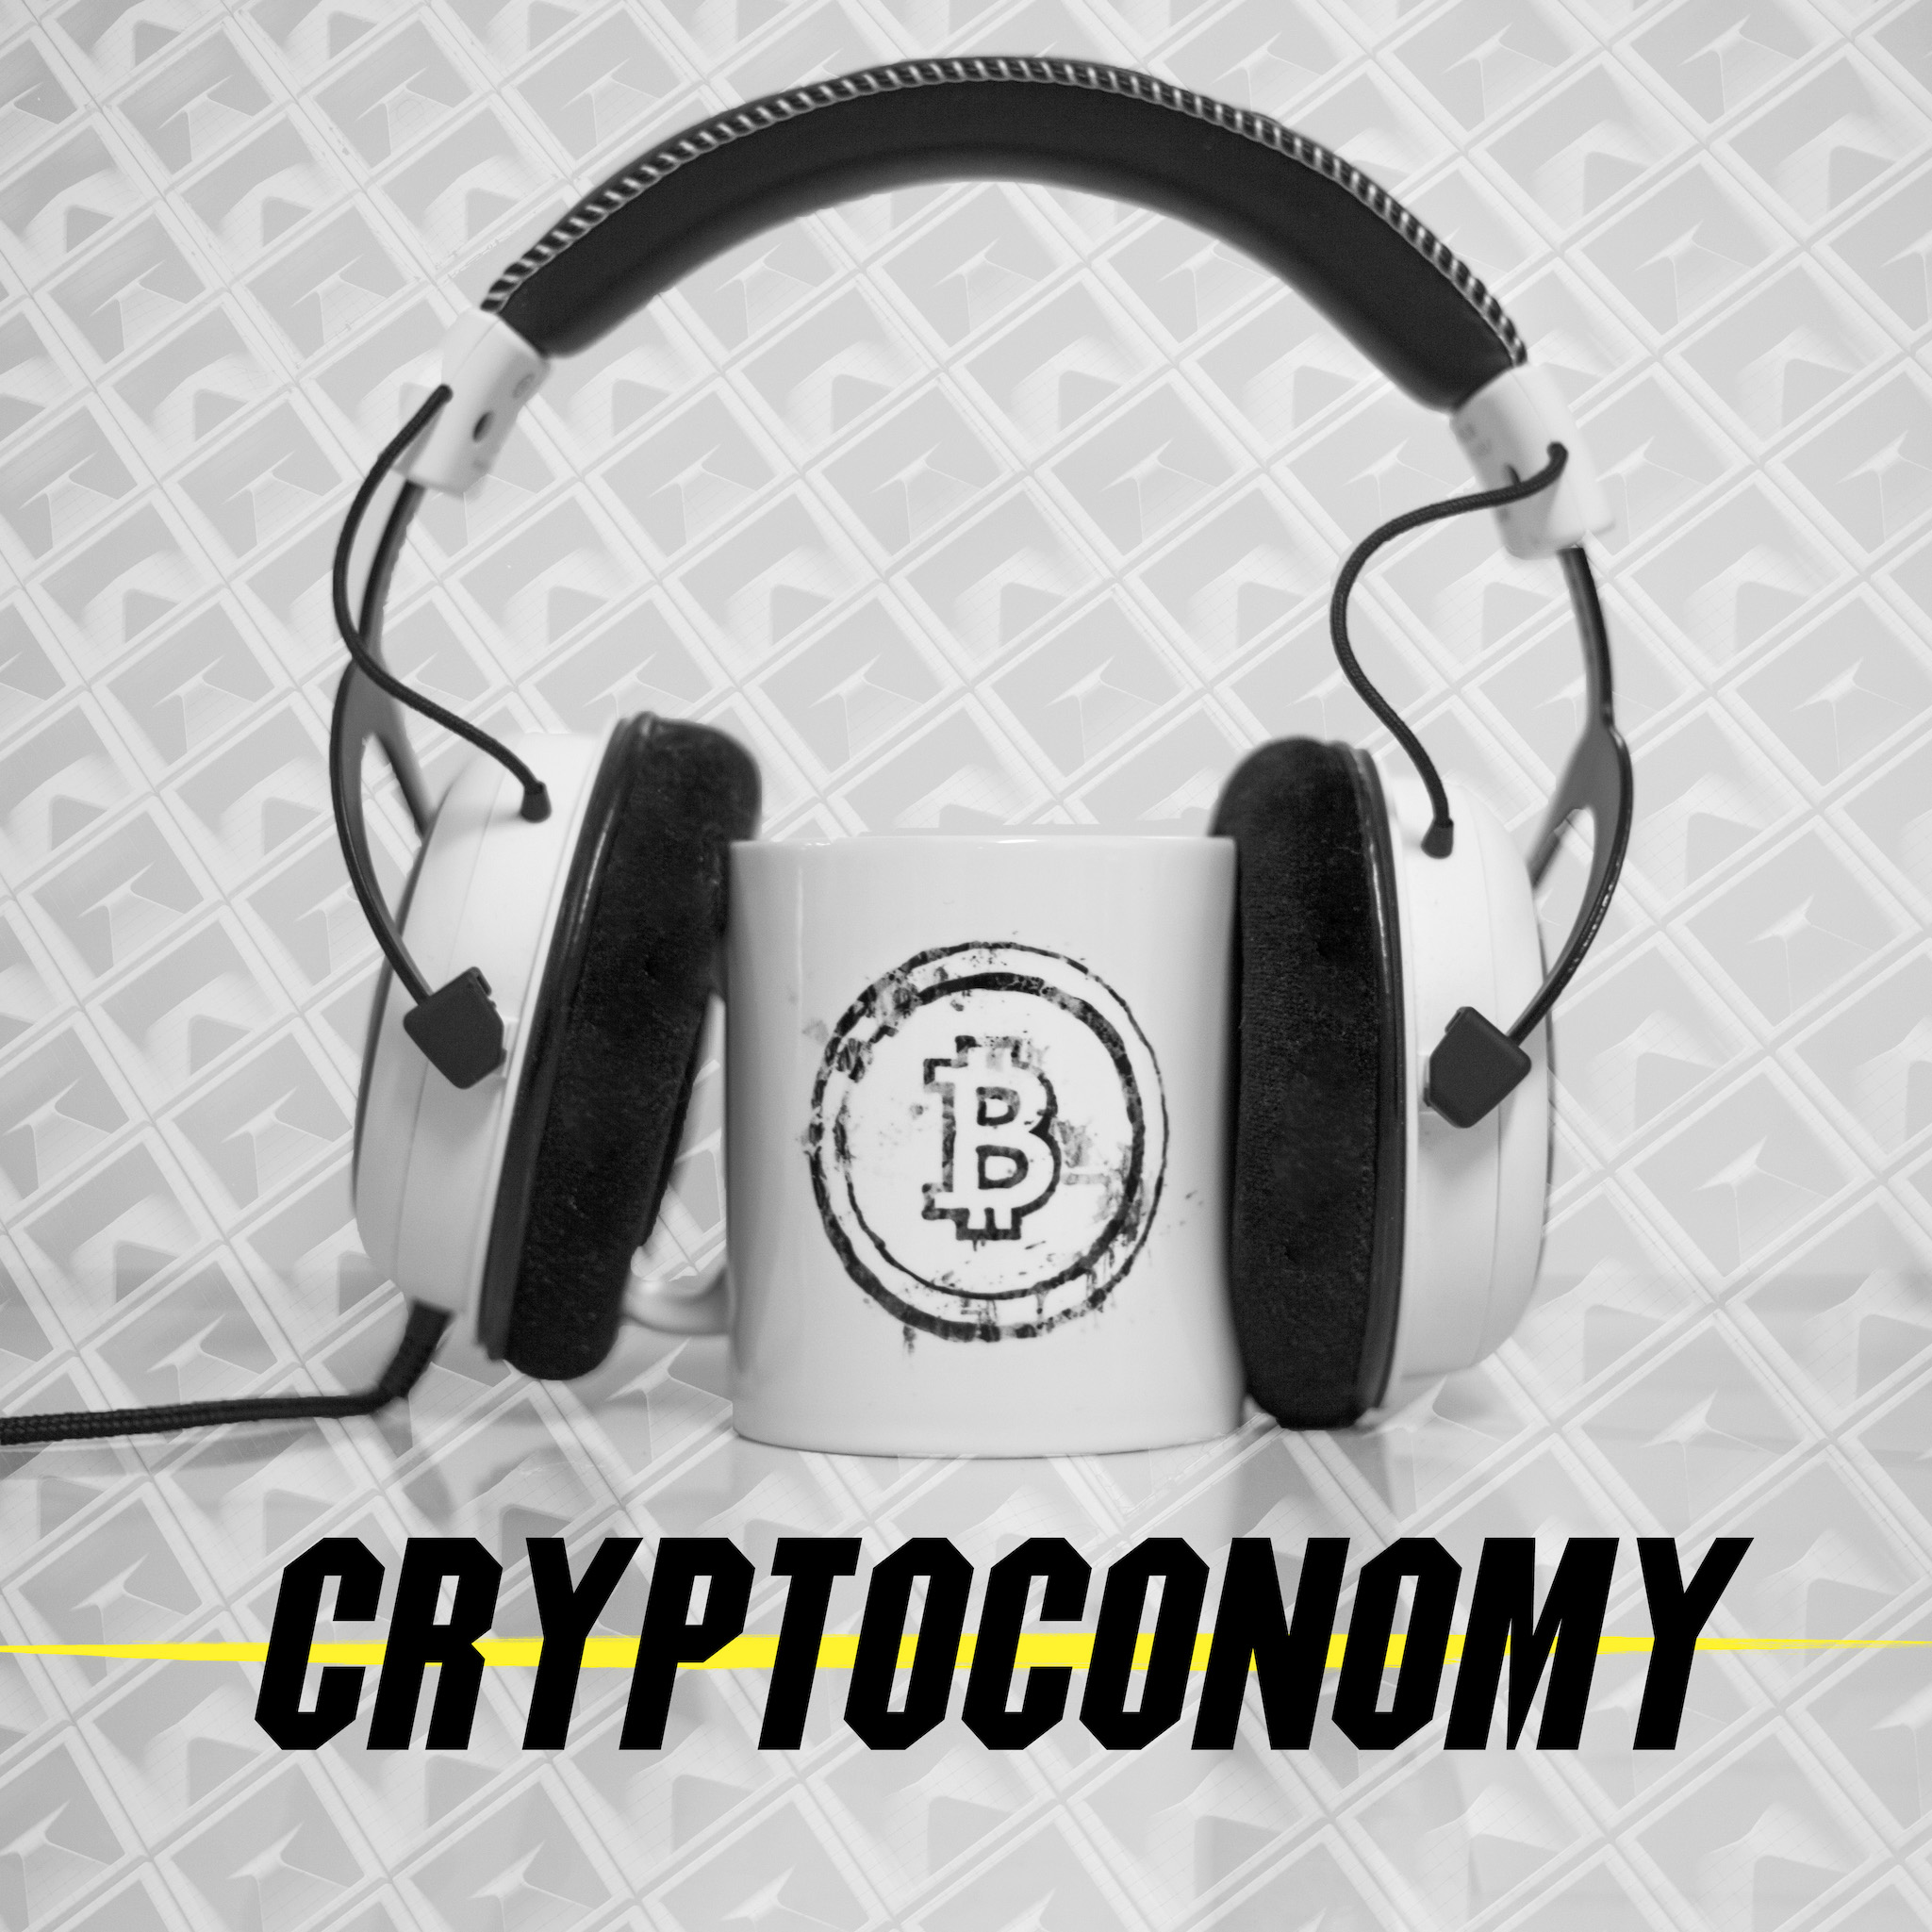 CryptoQuikRead_172 - Bitcoin's Distribution Was Fair [Dan Held]